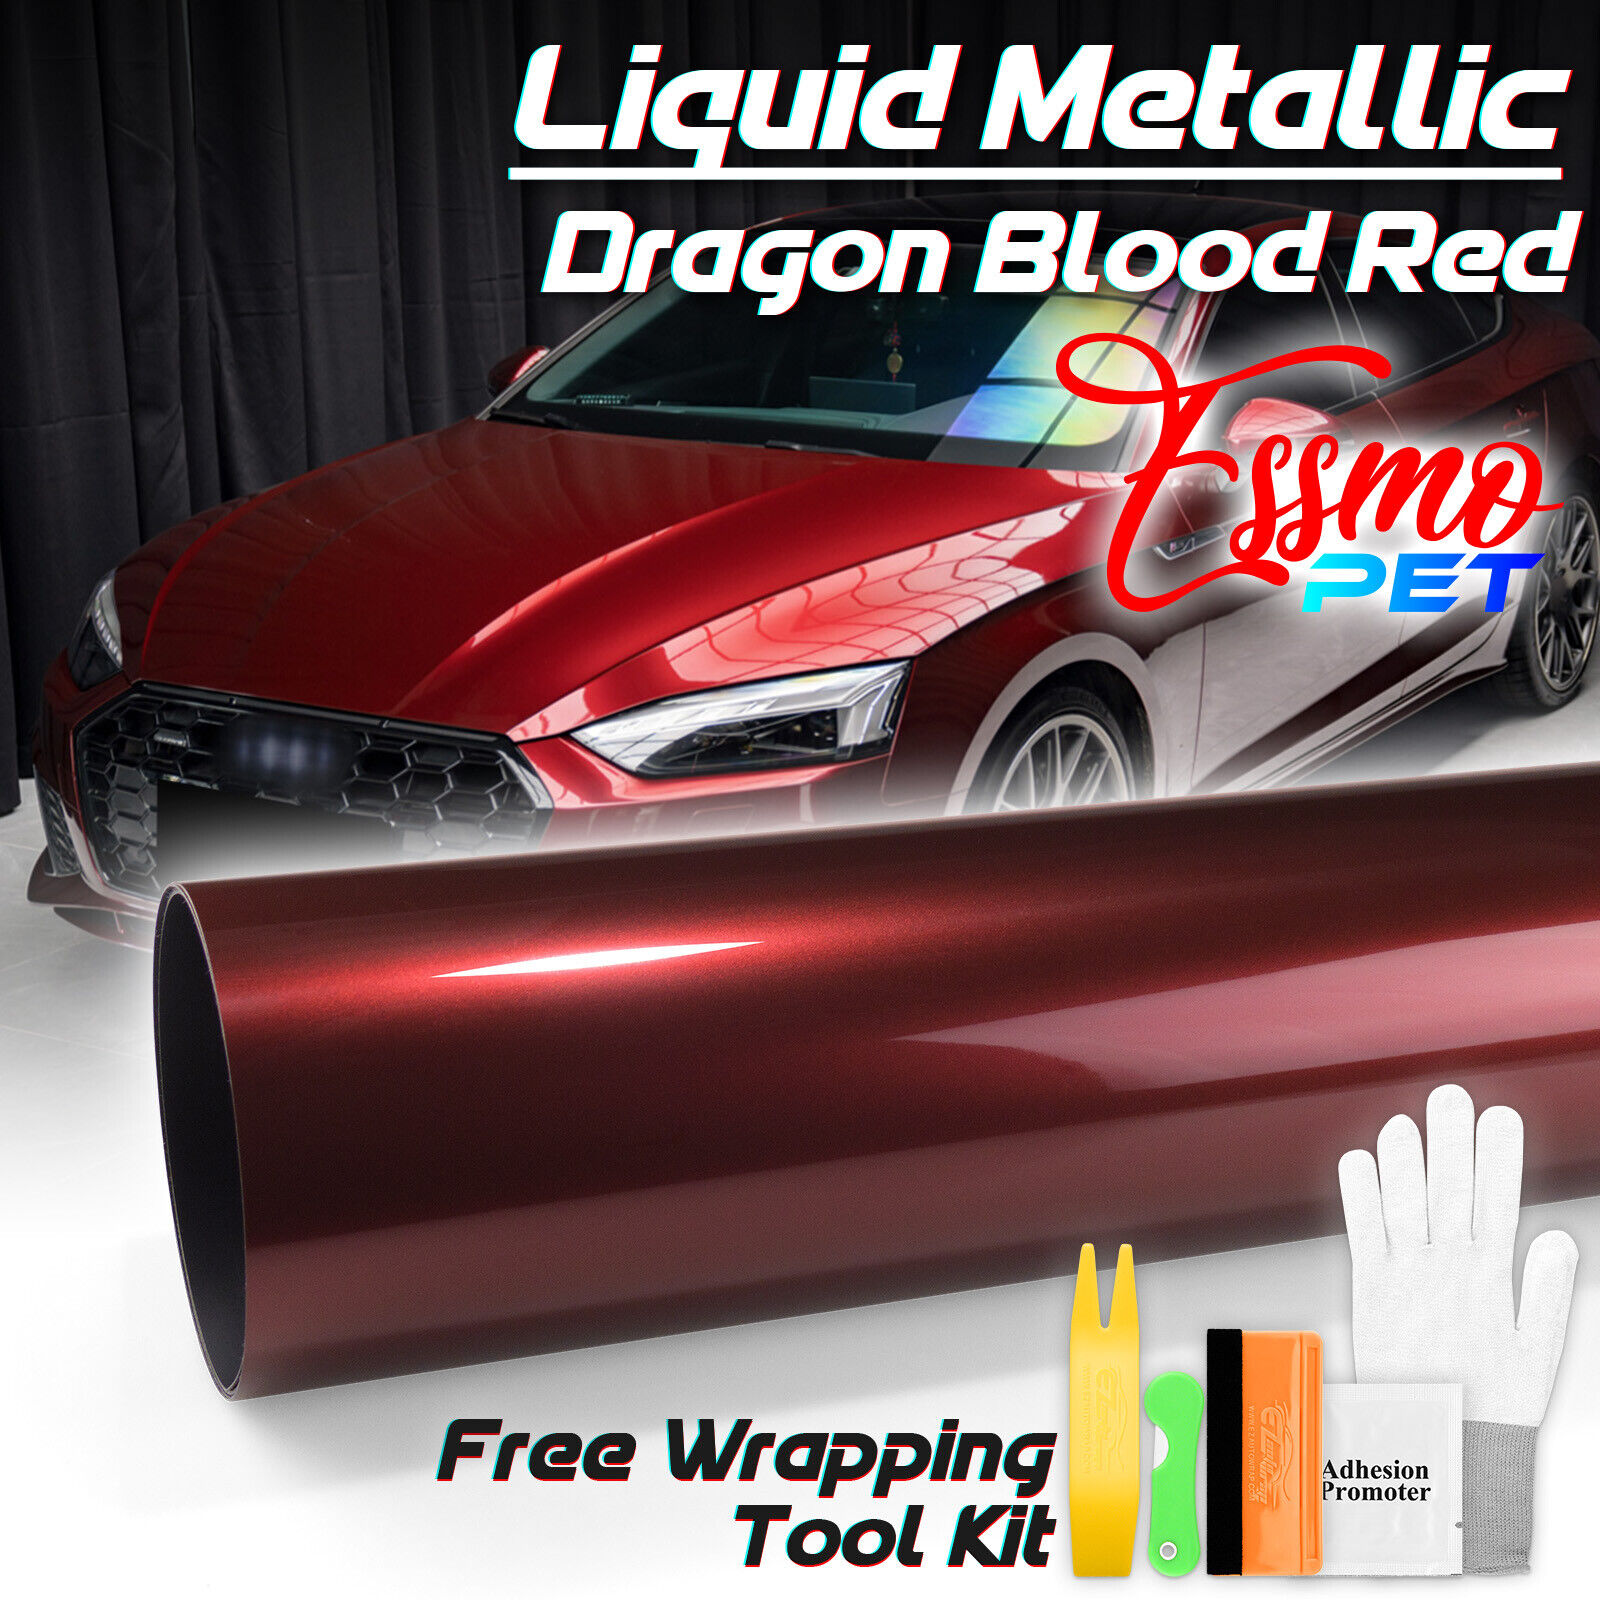 ESSMO PET Liquid Metallic Dragon Blood Red Car Vinyl Wrap Decal Sticker Paint